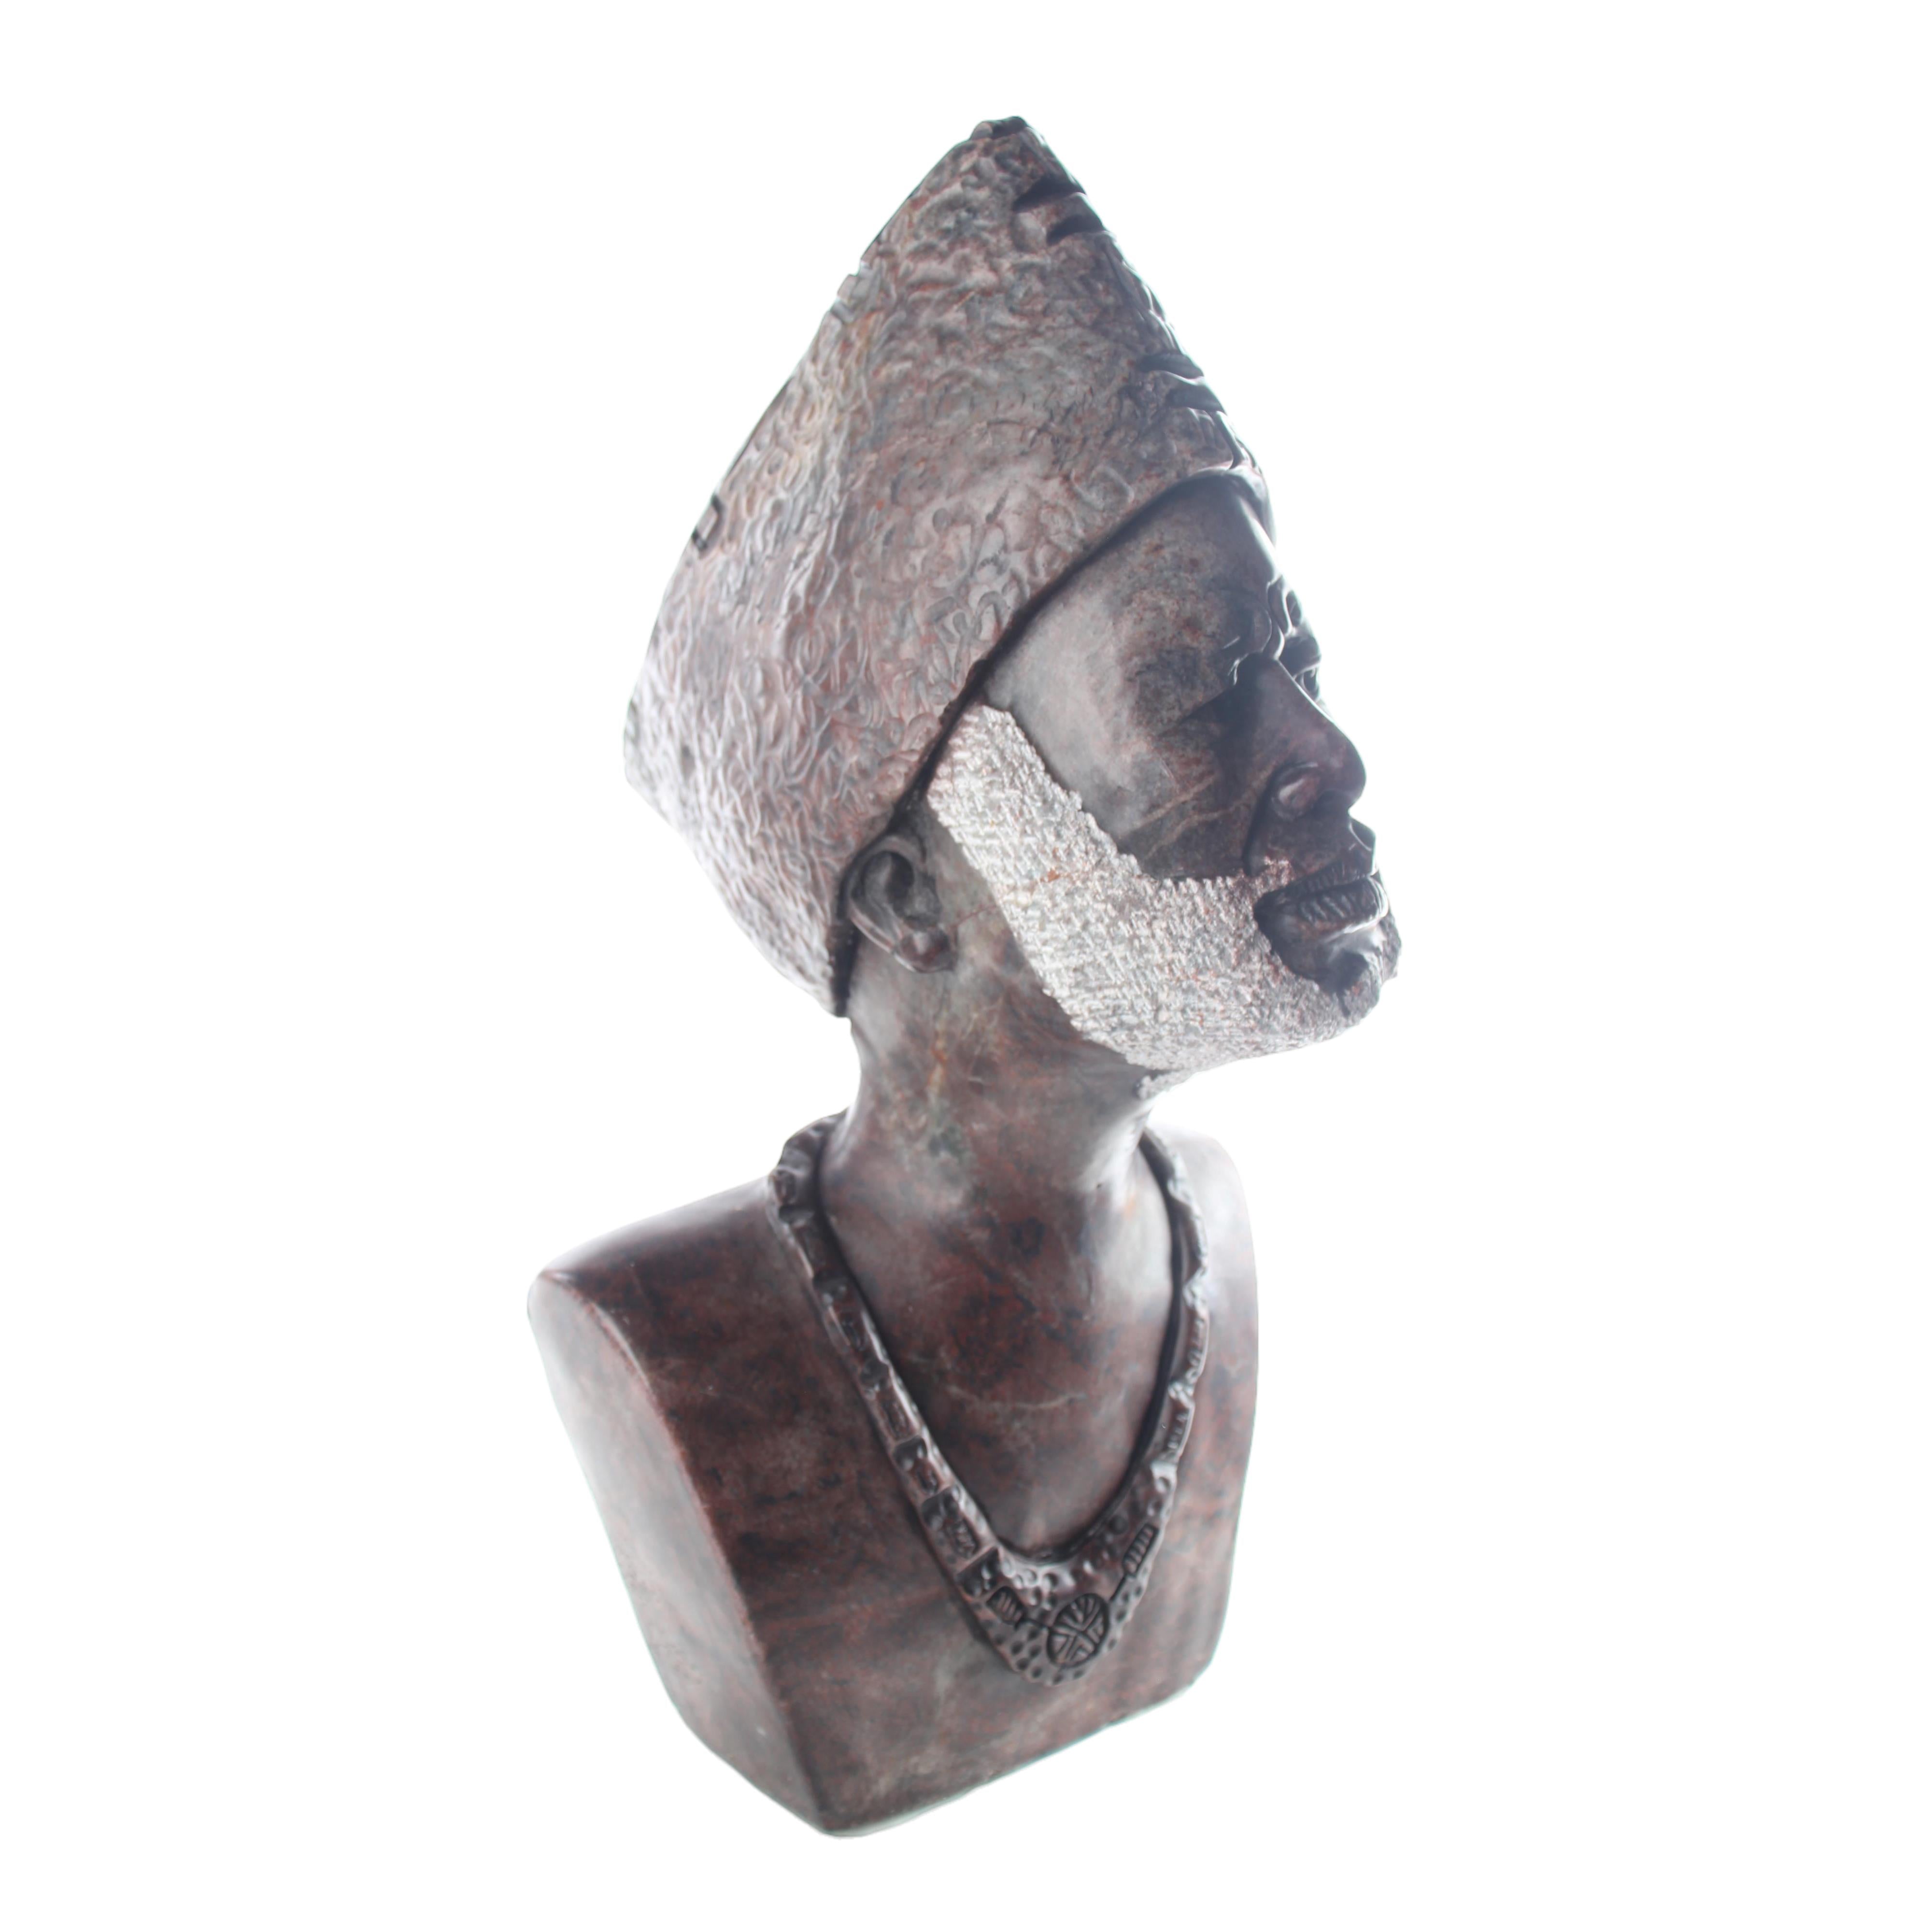 Shona Tribe Serpentine Stone Busts ~18.5" Tall